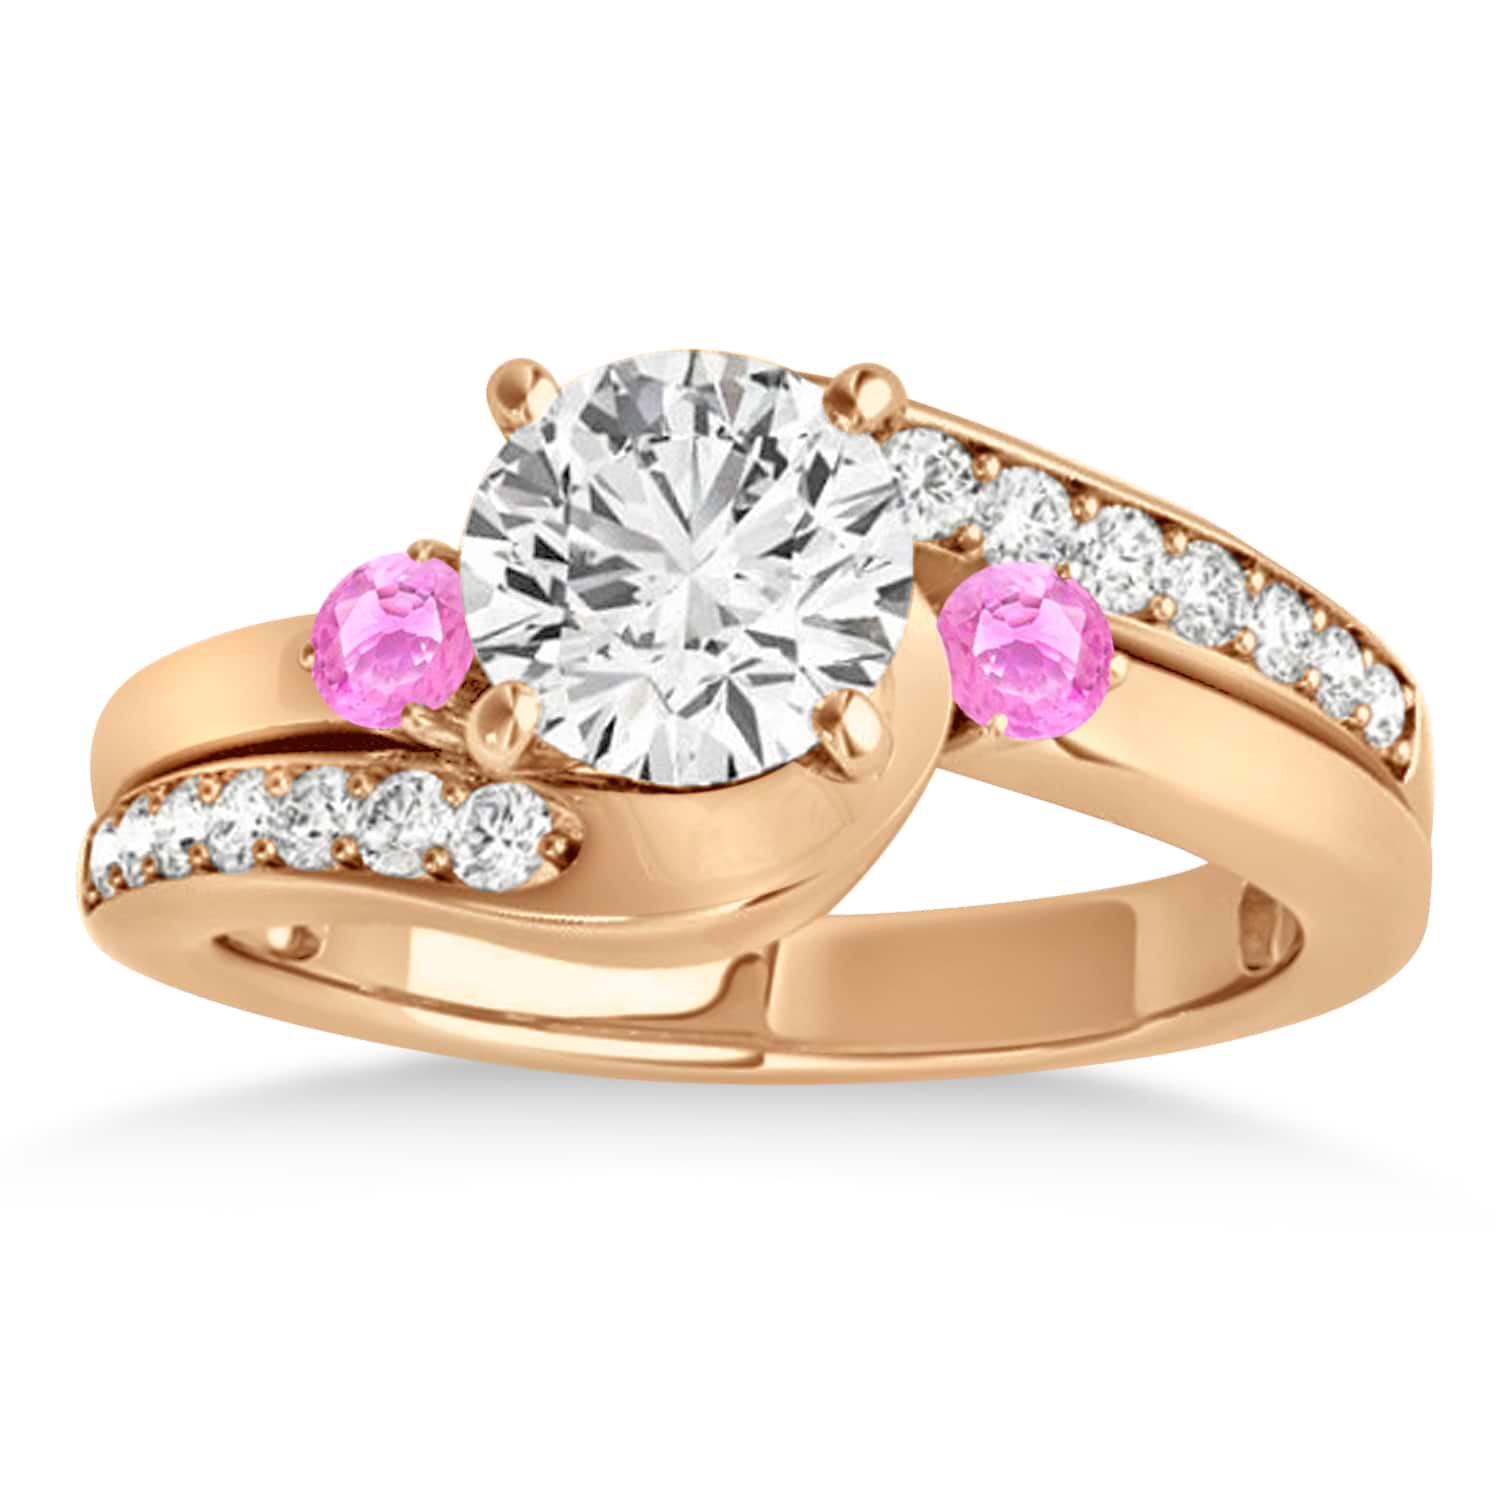 Swirl Design Pink Sapphire & Diamond Engagement Ring Setting 18k Rose Gold 0.38ct